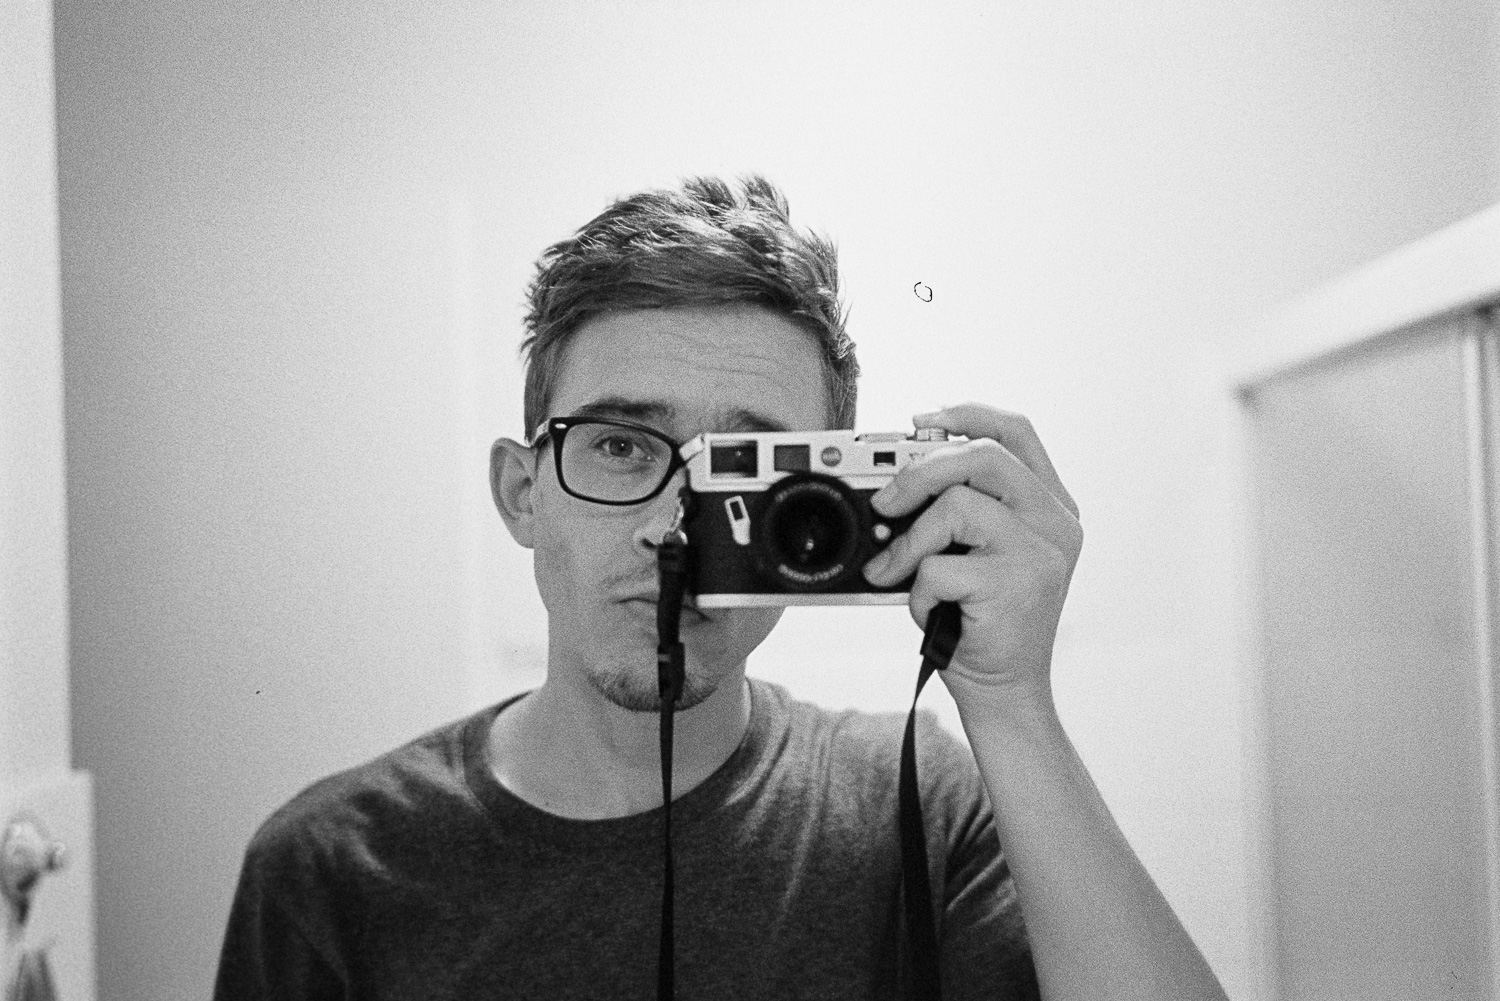  Leica selfie #33,548 